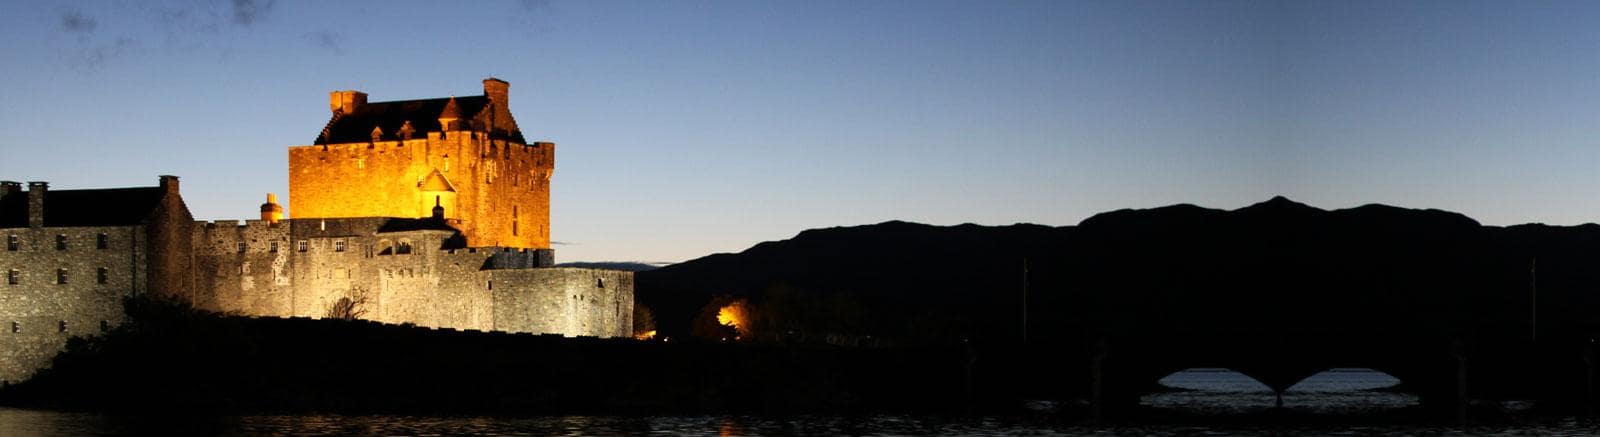 Scottish Castles At Night - Scottish Tourer 